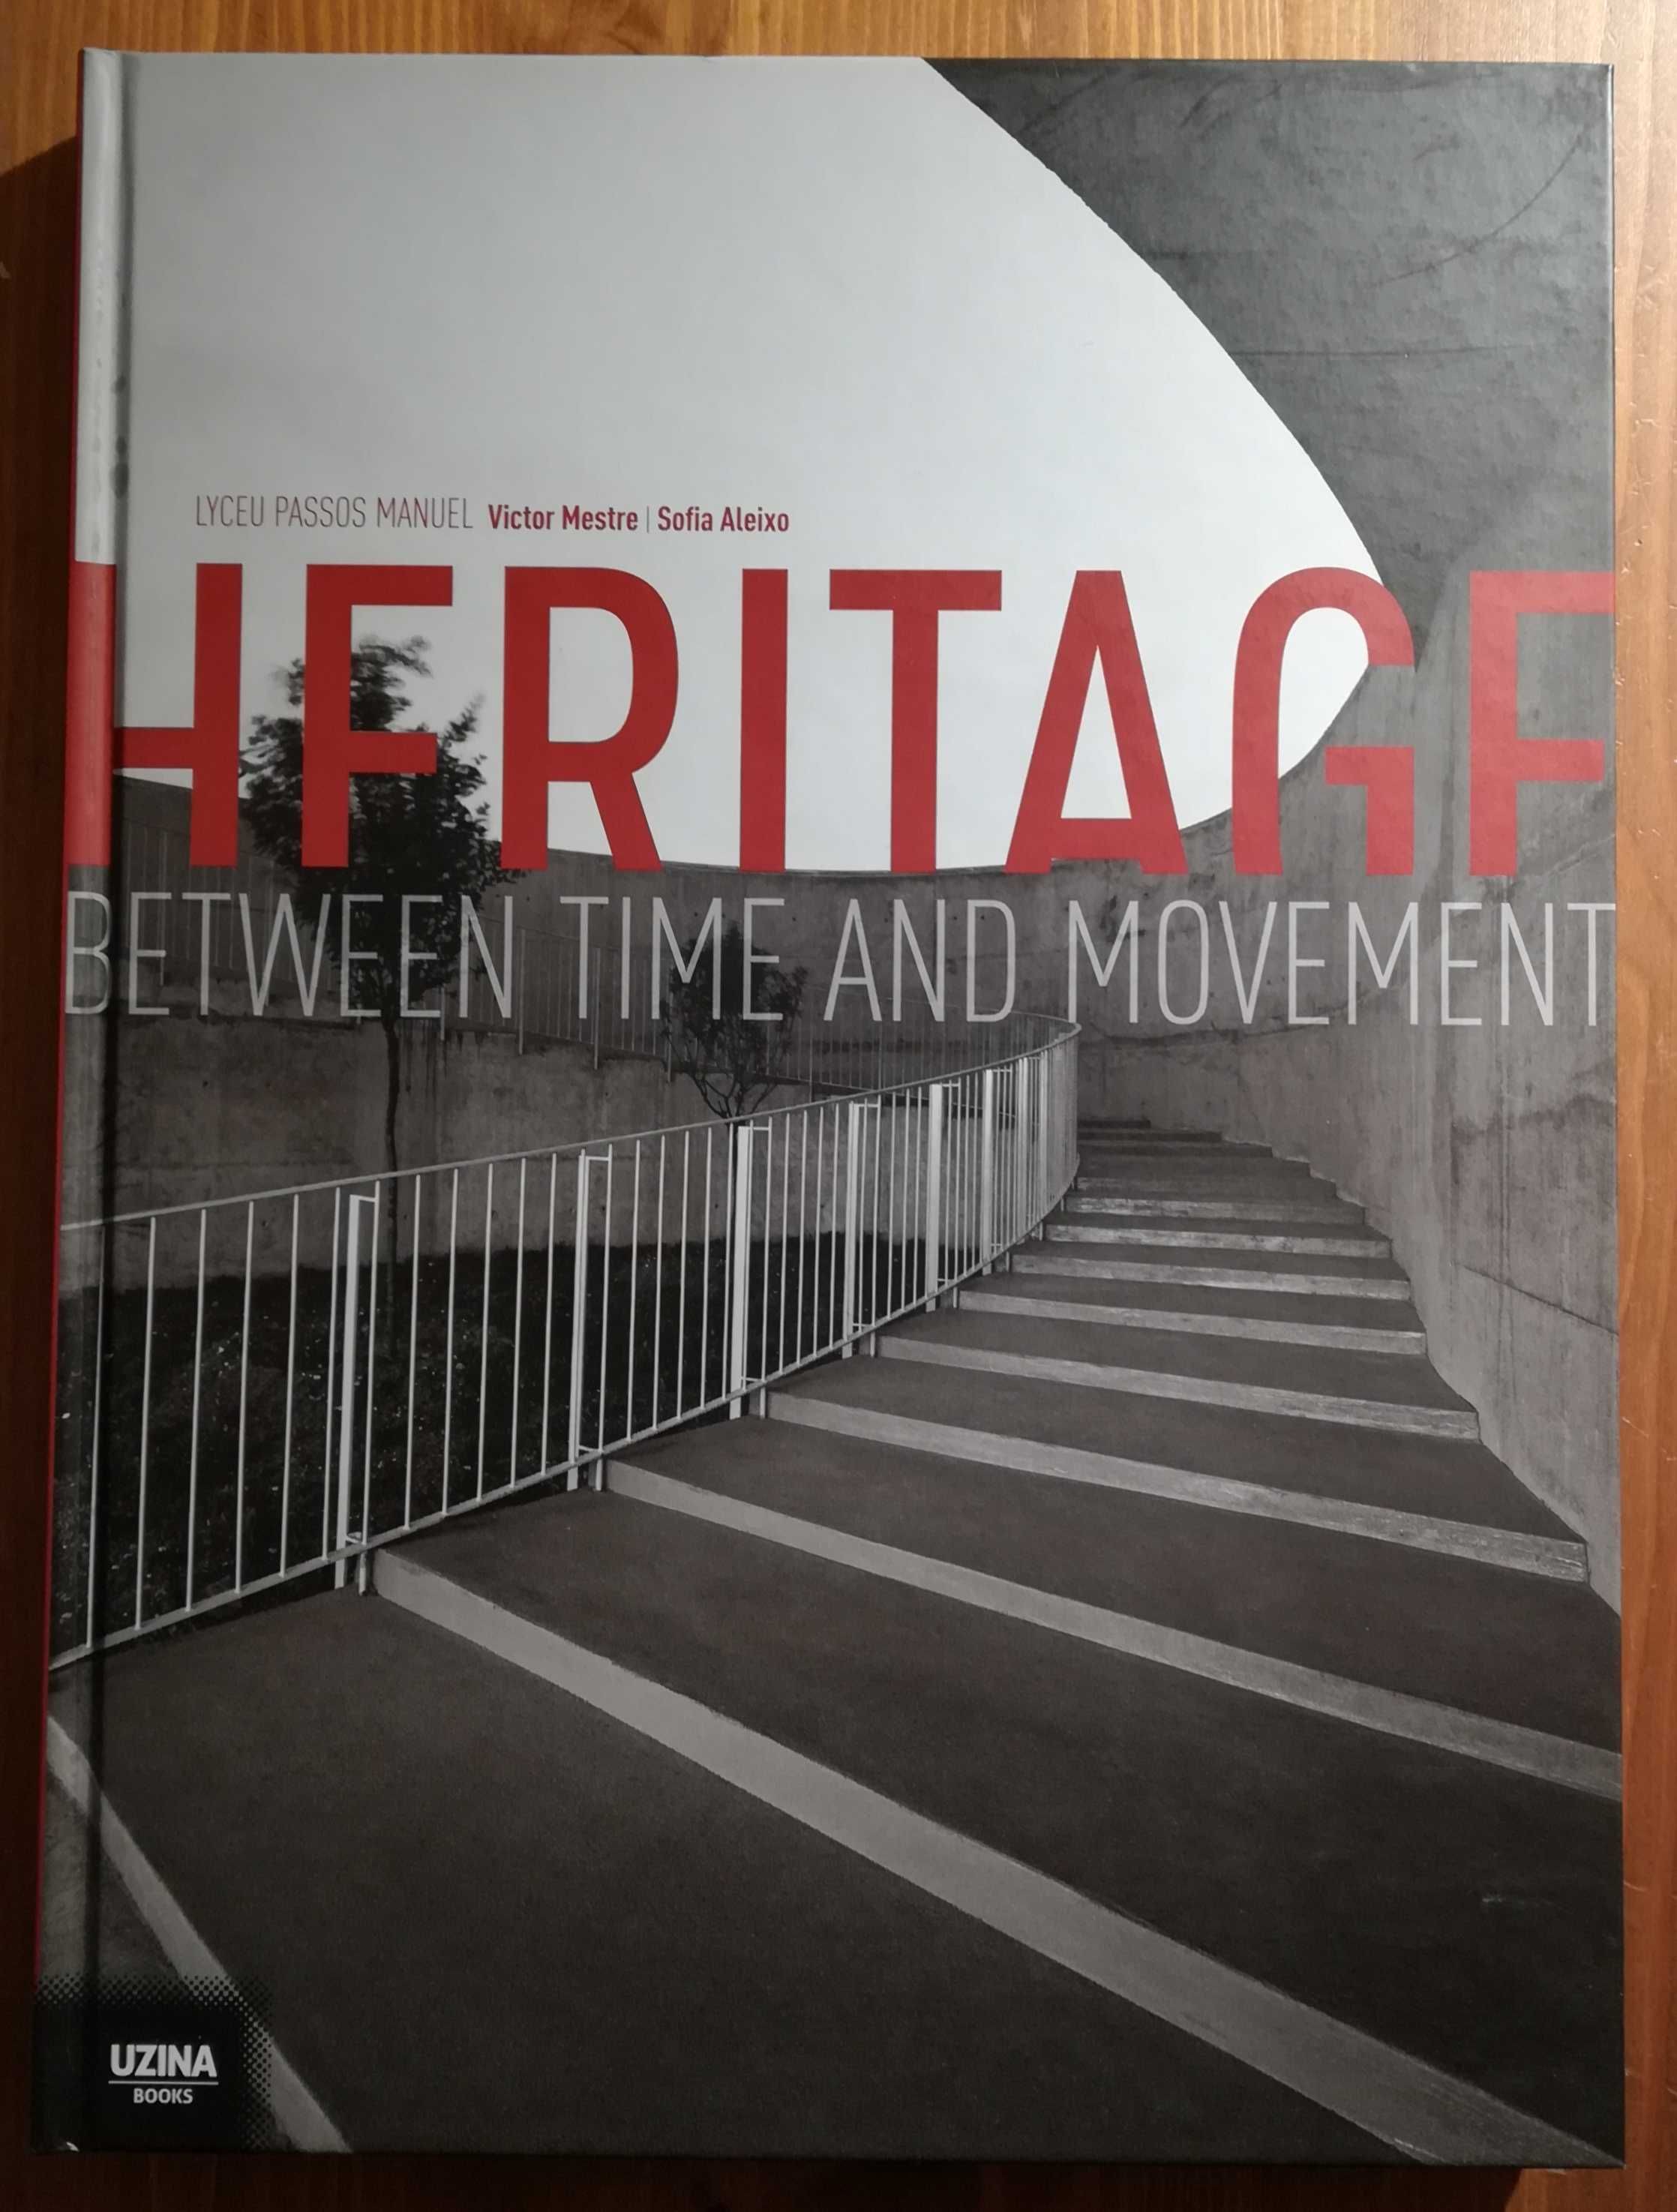 Lyceu Passos Manuel - Heritage: Between Time and Movement